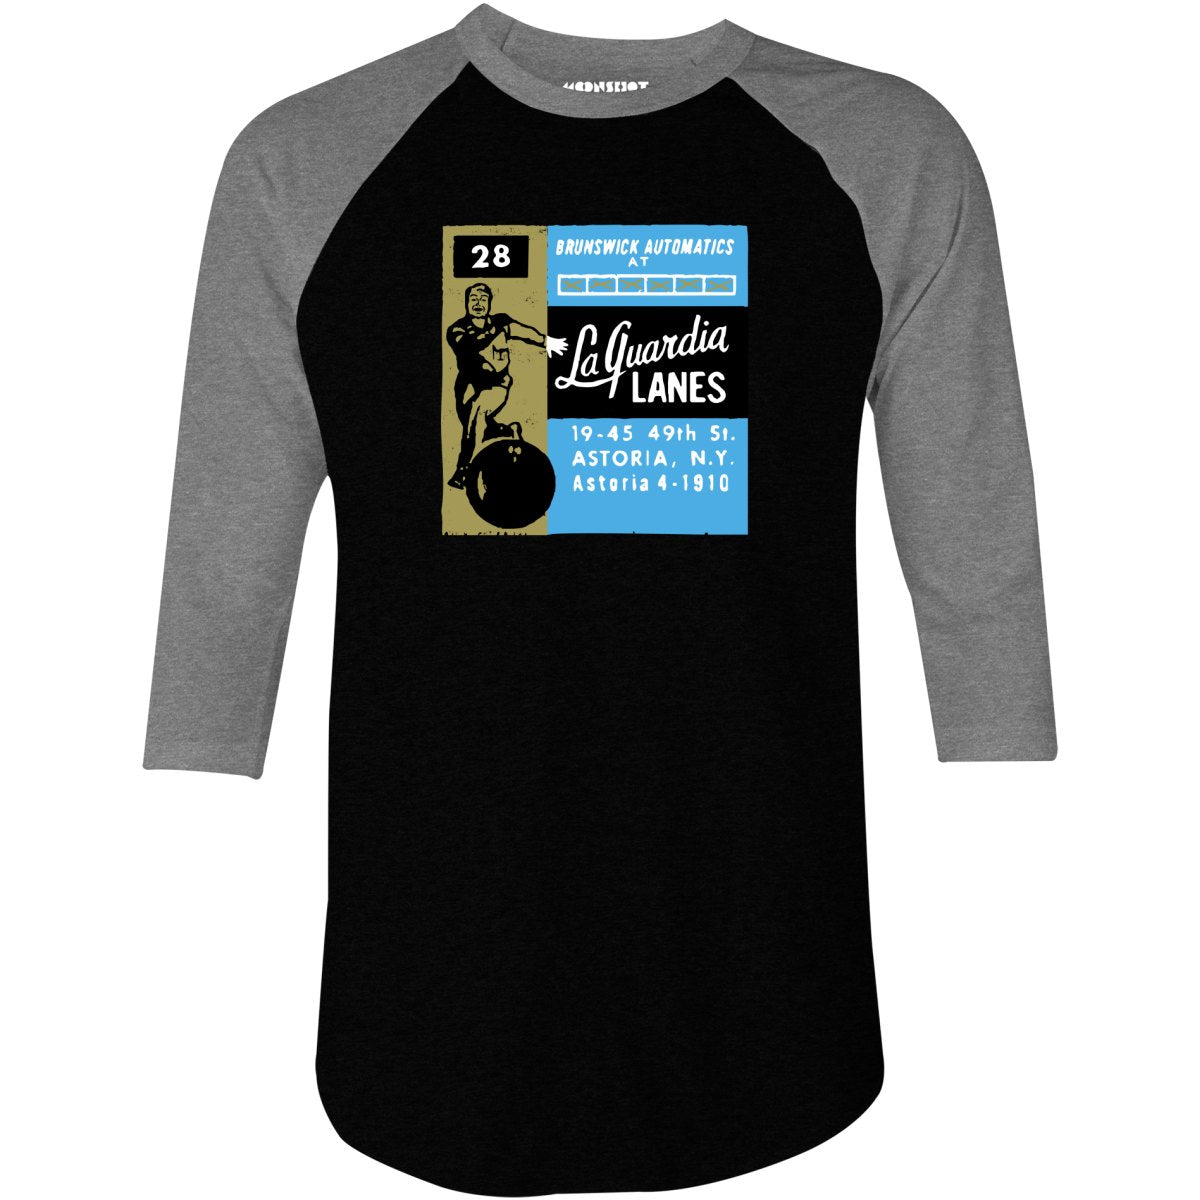 La Guardia Lanes - Astoria, NY - Vintage Bowling Alley - 3/4 Sleeve Raglan T-Shirt